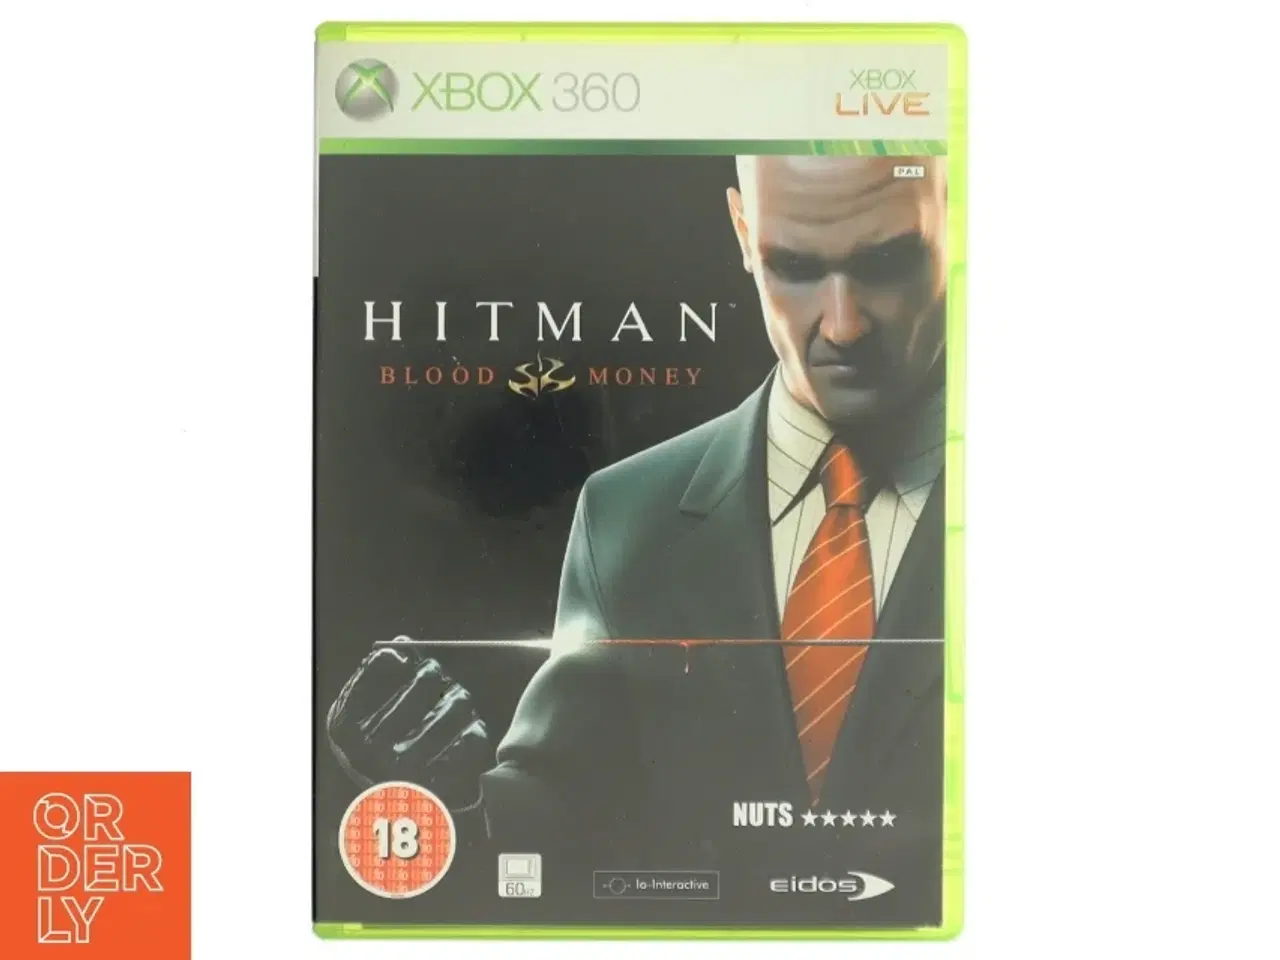 Billede 1 - Hitman Blood Money Xbox 360 spil fra Eidos Interactive